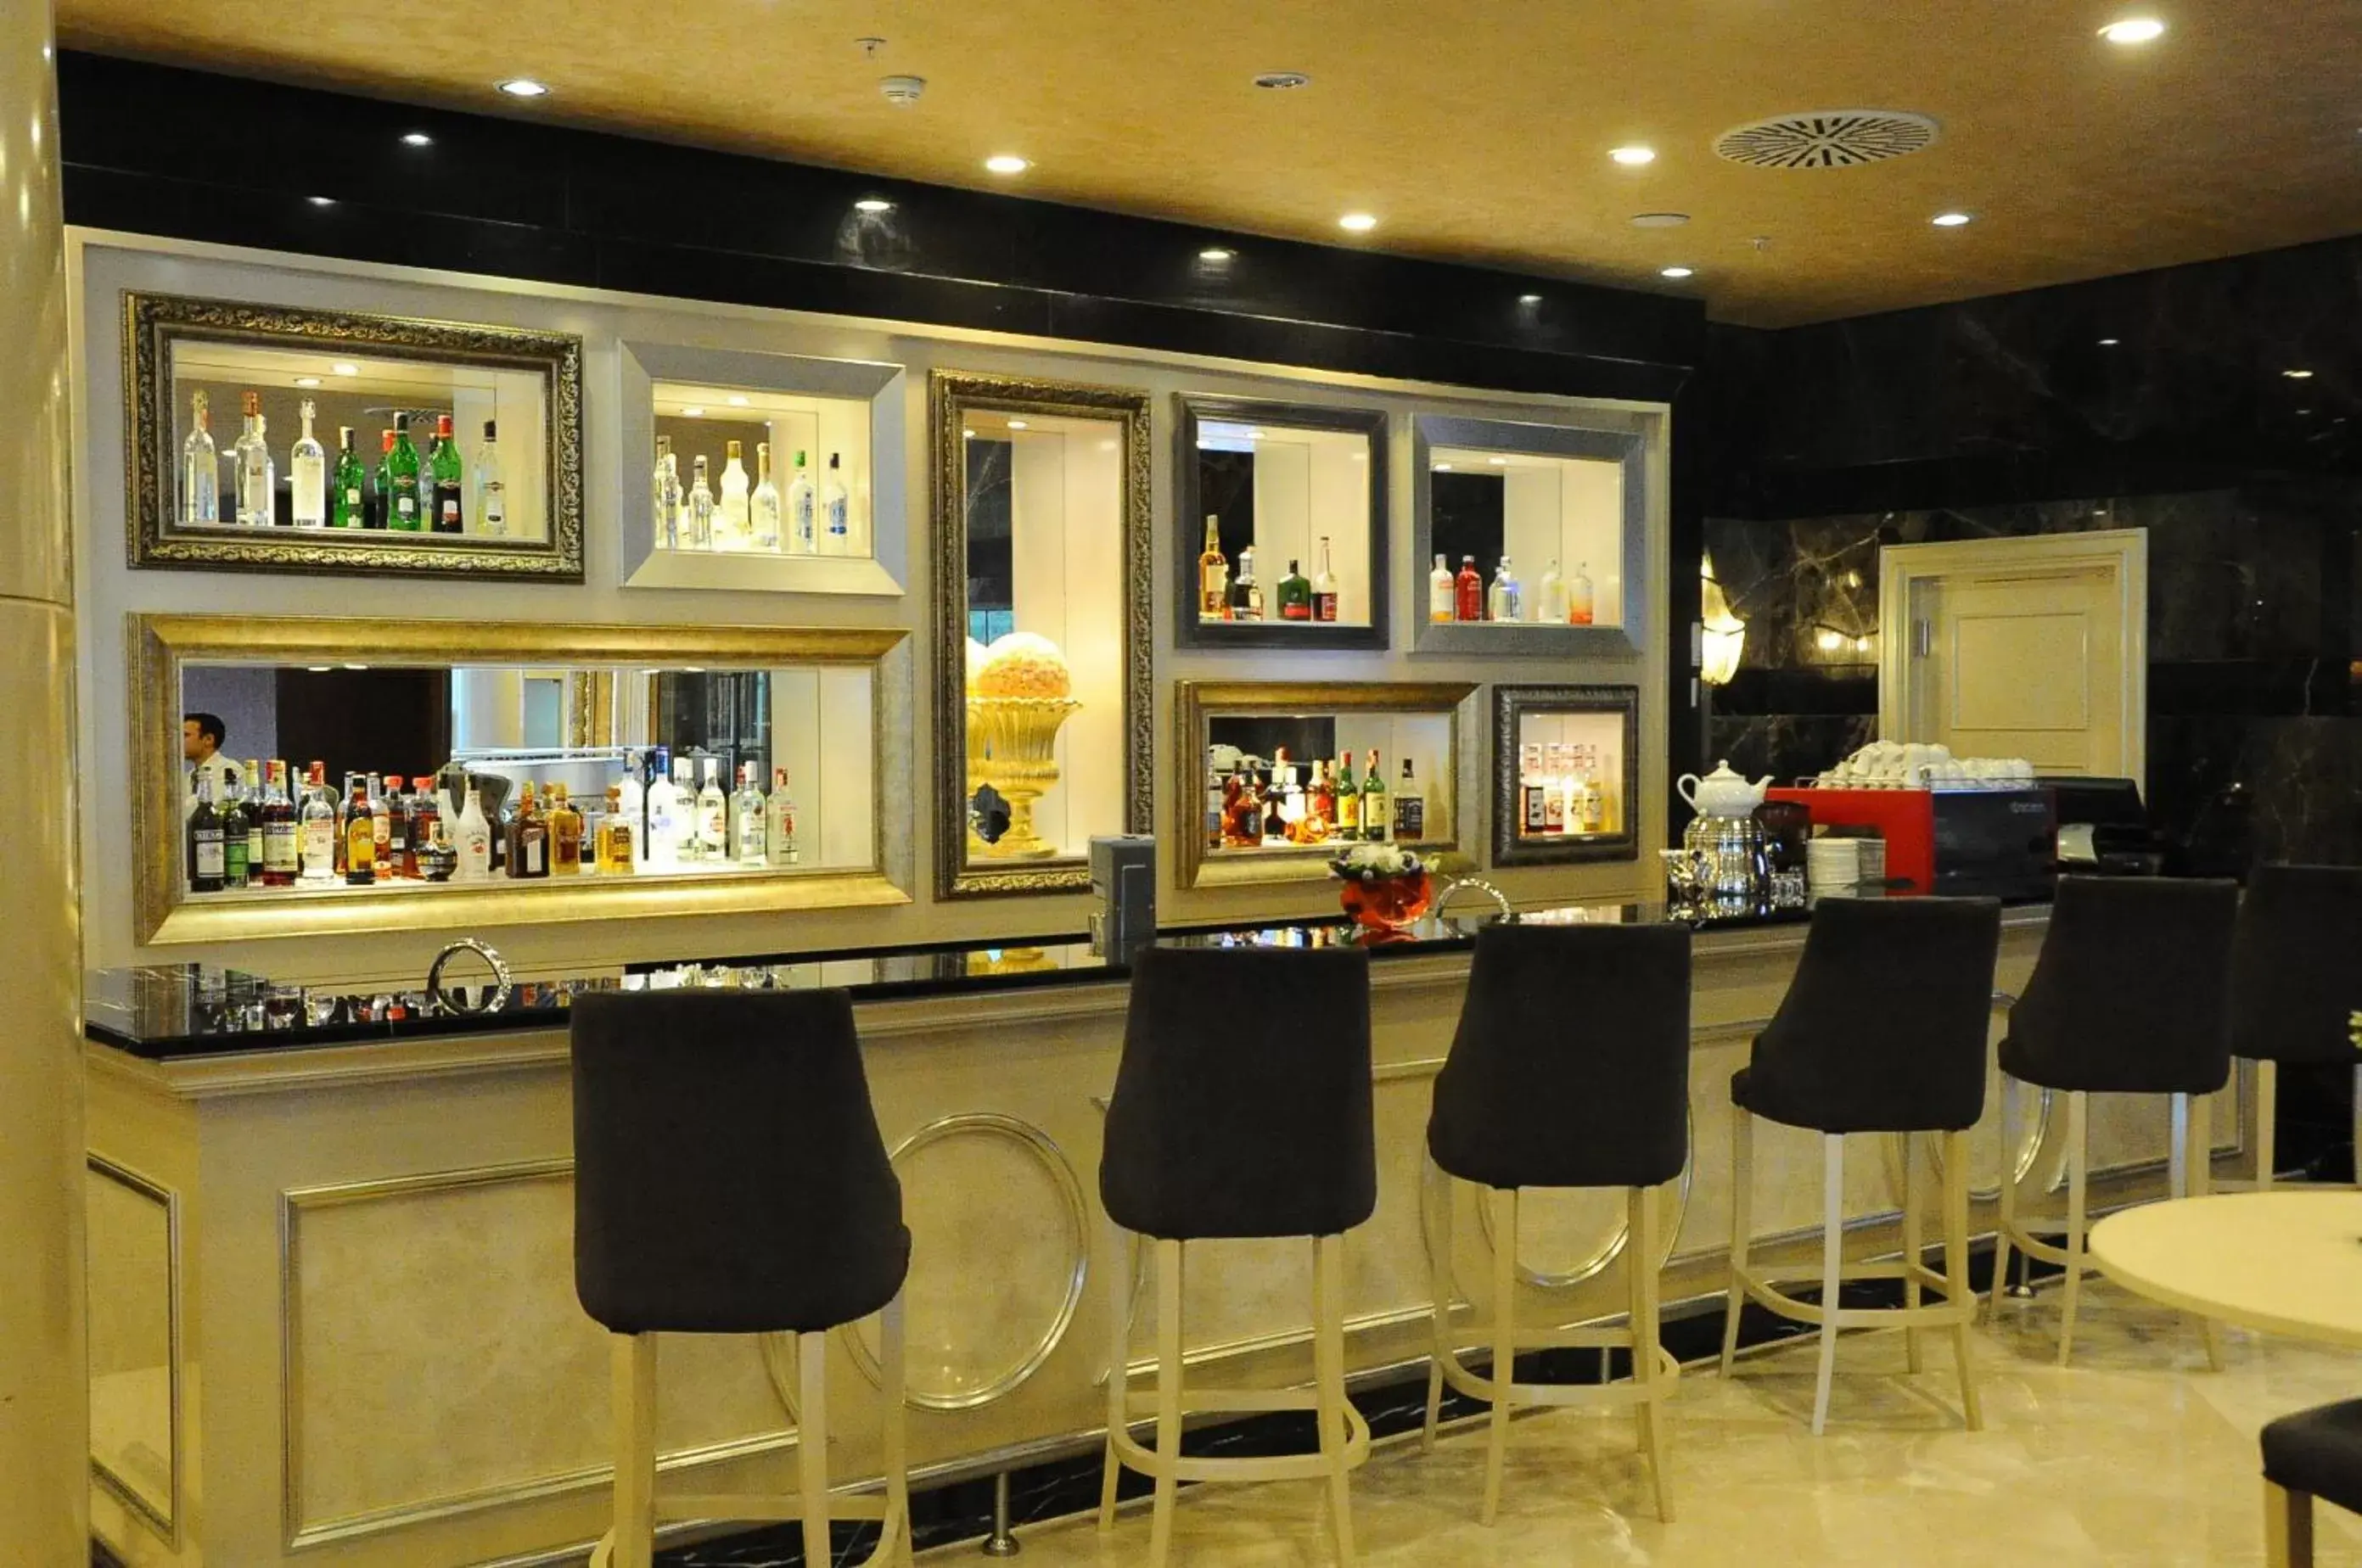 Lobby or reception in Limak Eurasia Luxury Hotel